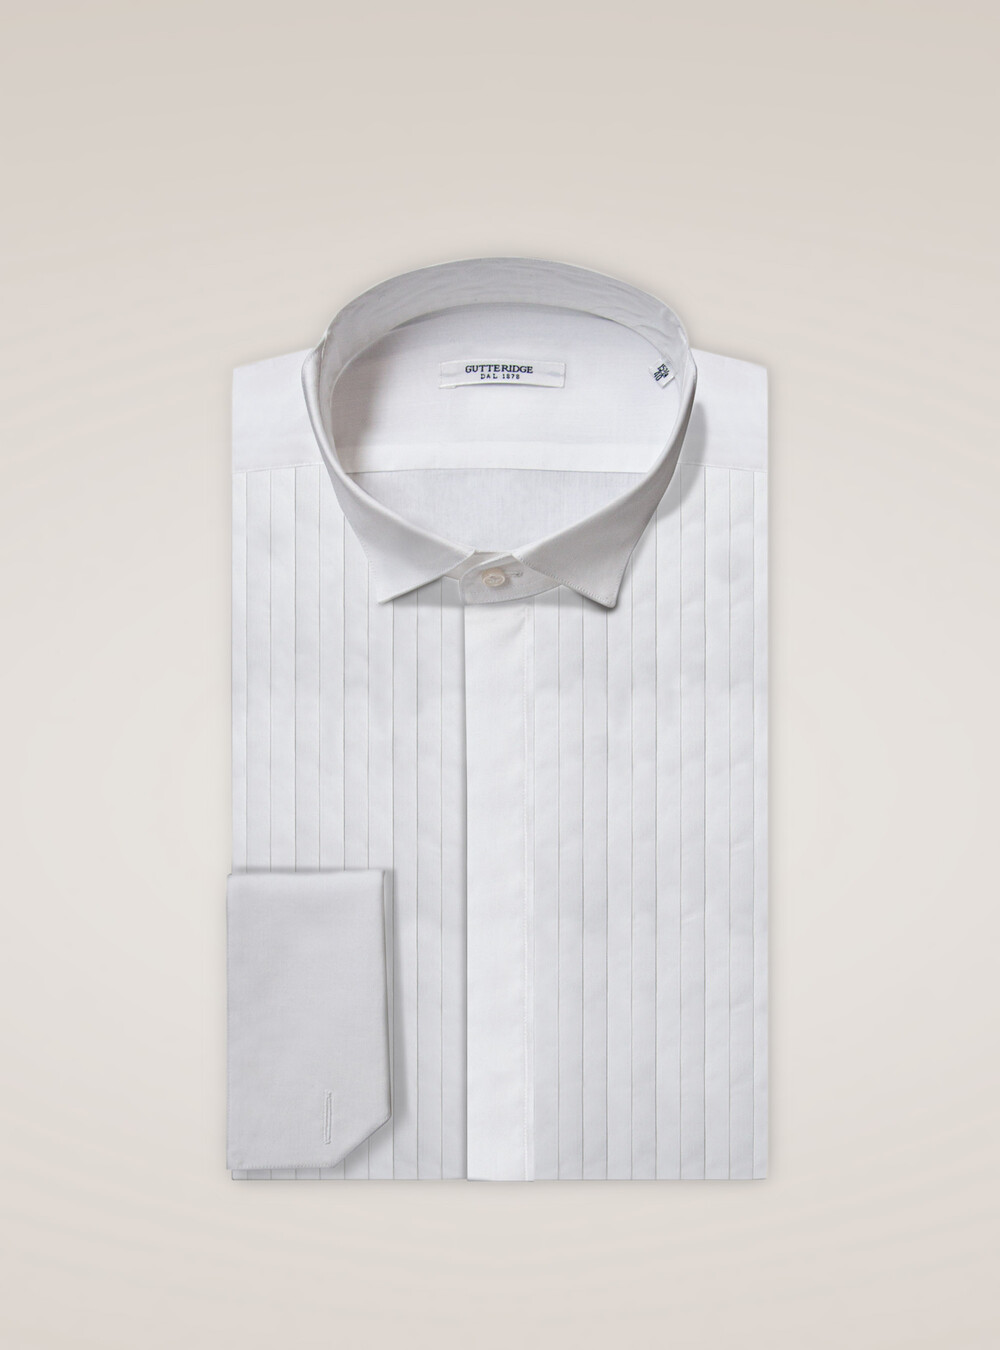 Camicia smoking collo diplomatico con polso gemelli | Gutteridge | catalog- gutteridge-storefront Uomo